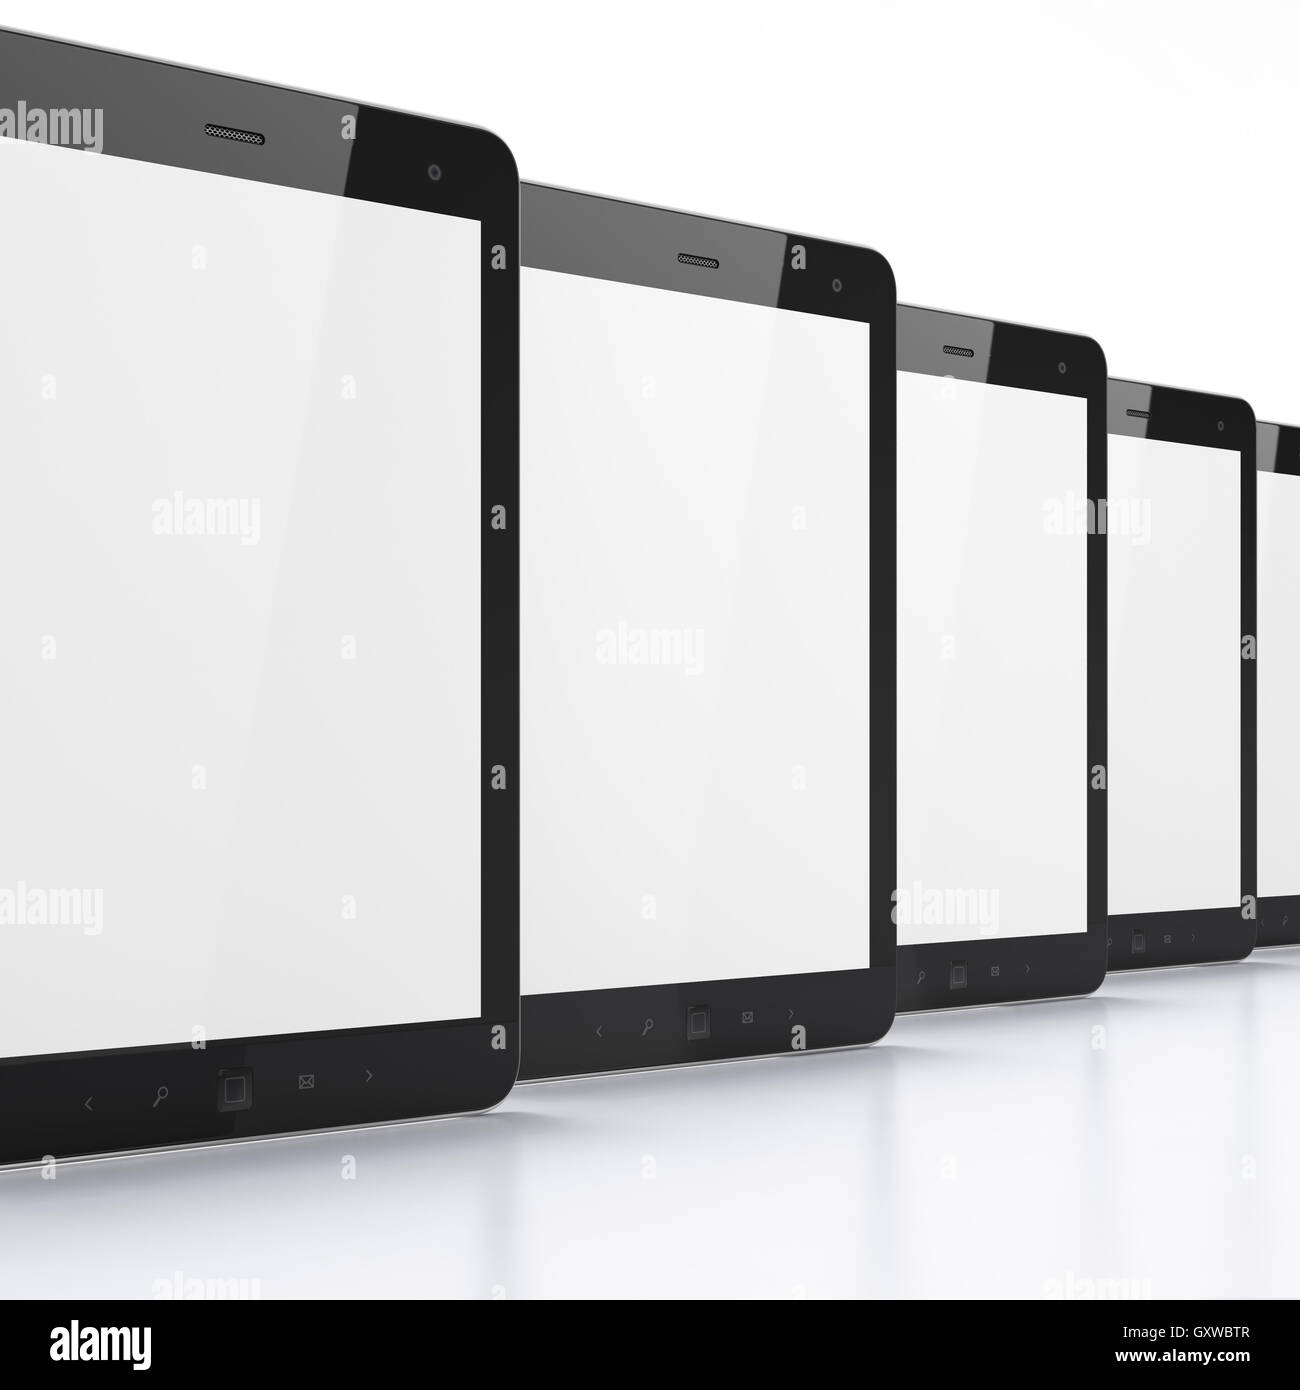 Black tablets on white background Stock Photo